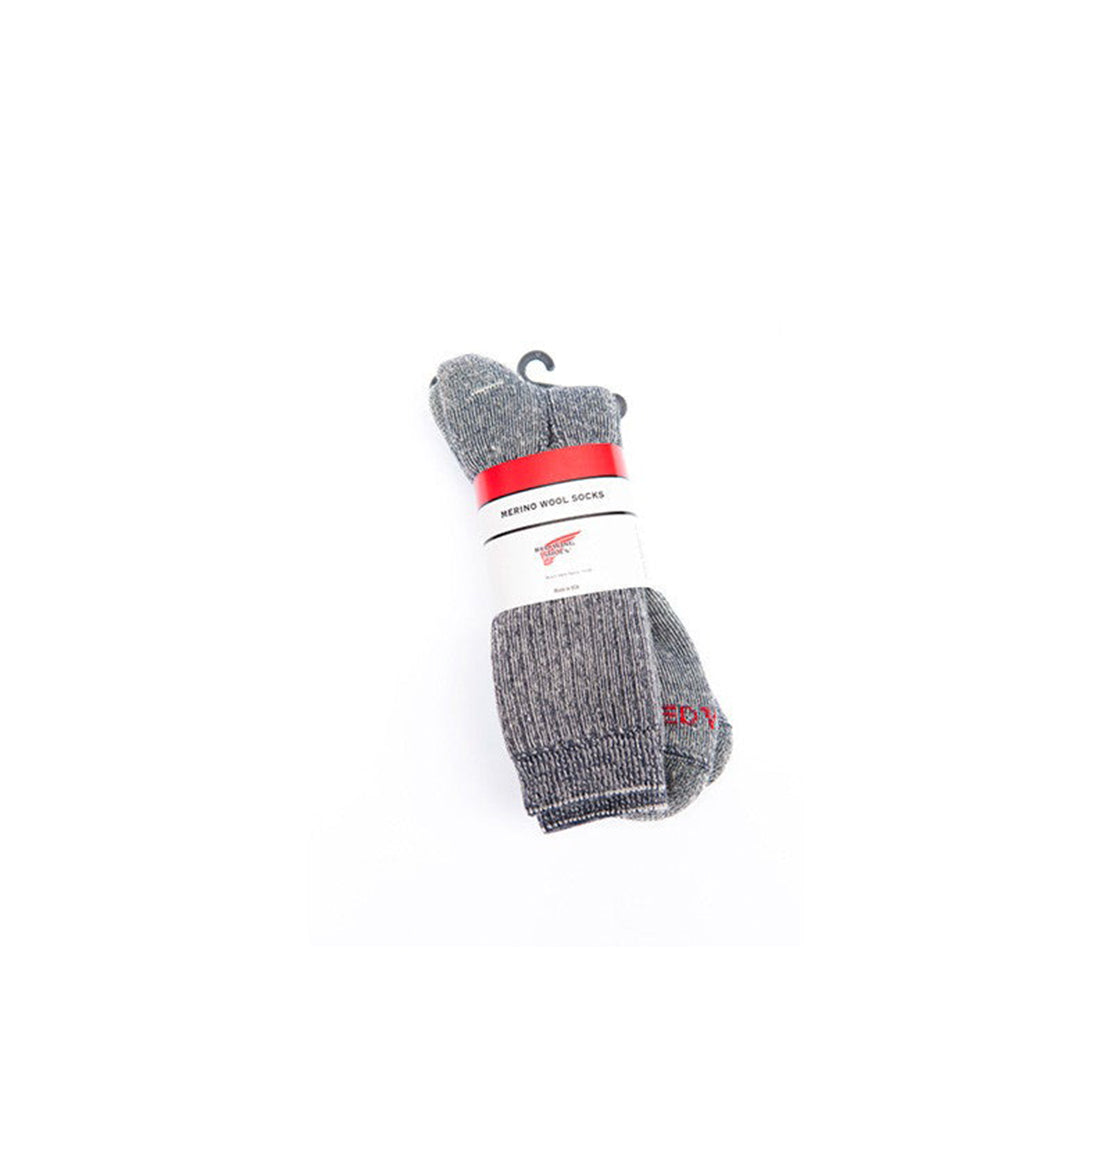 Redwing merino wool socks 